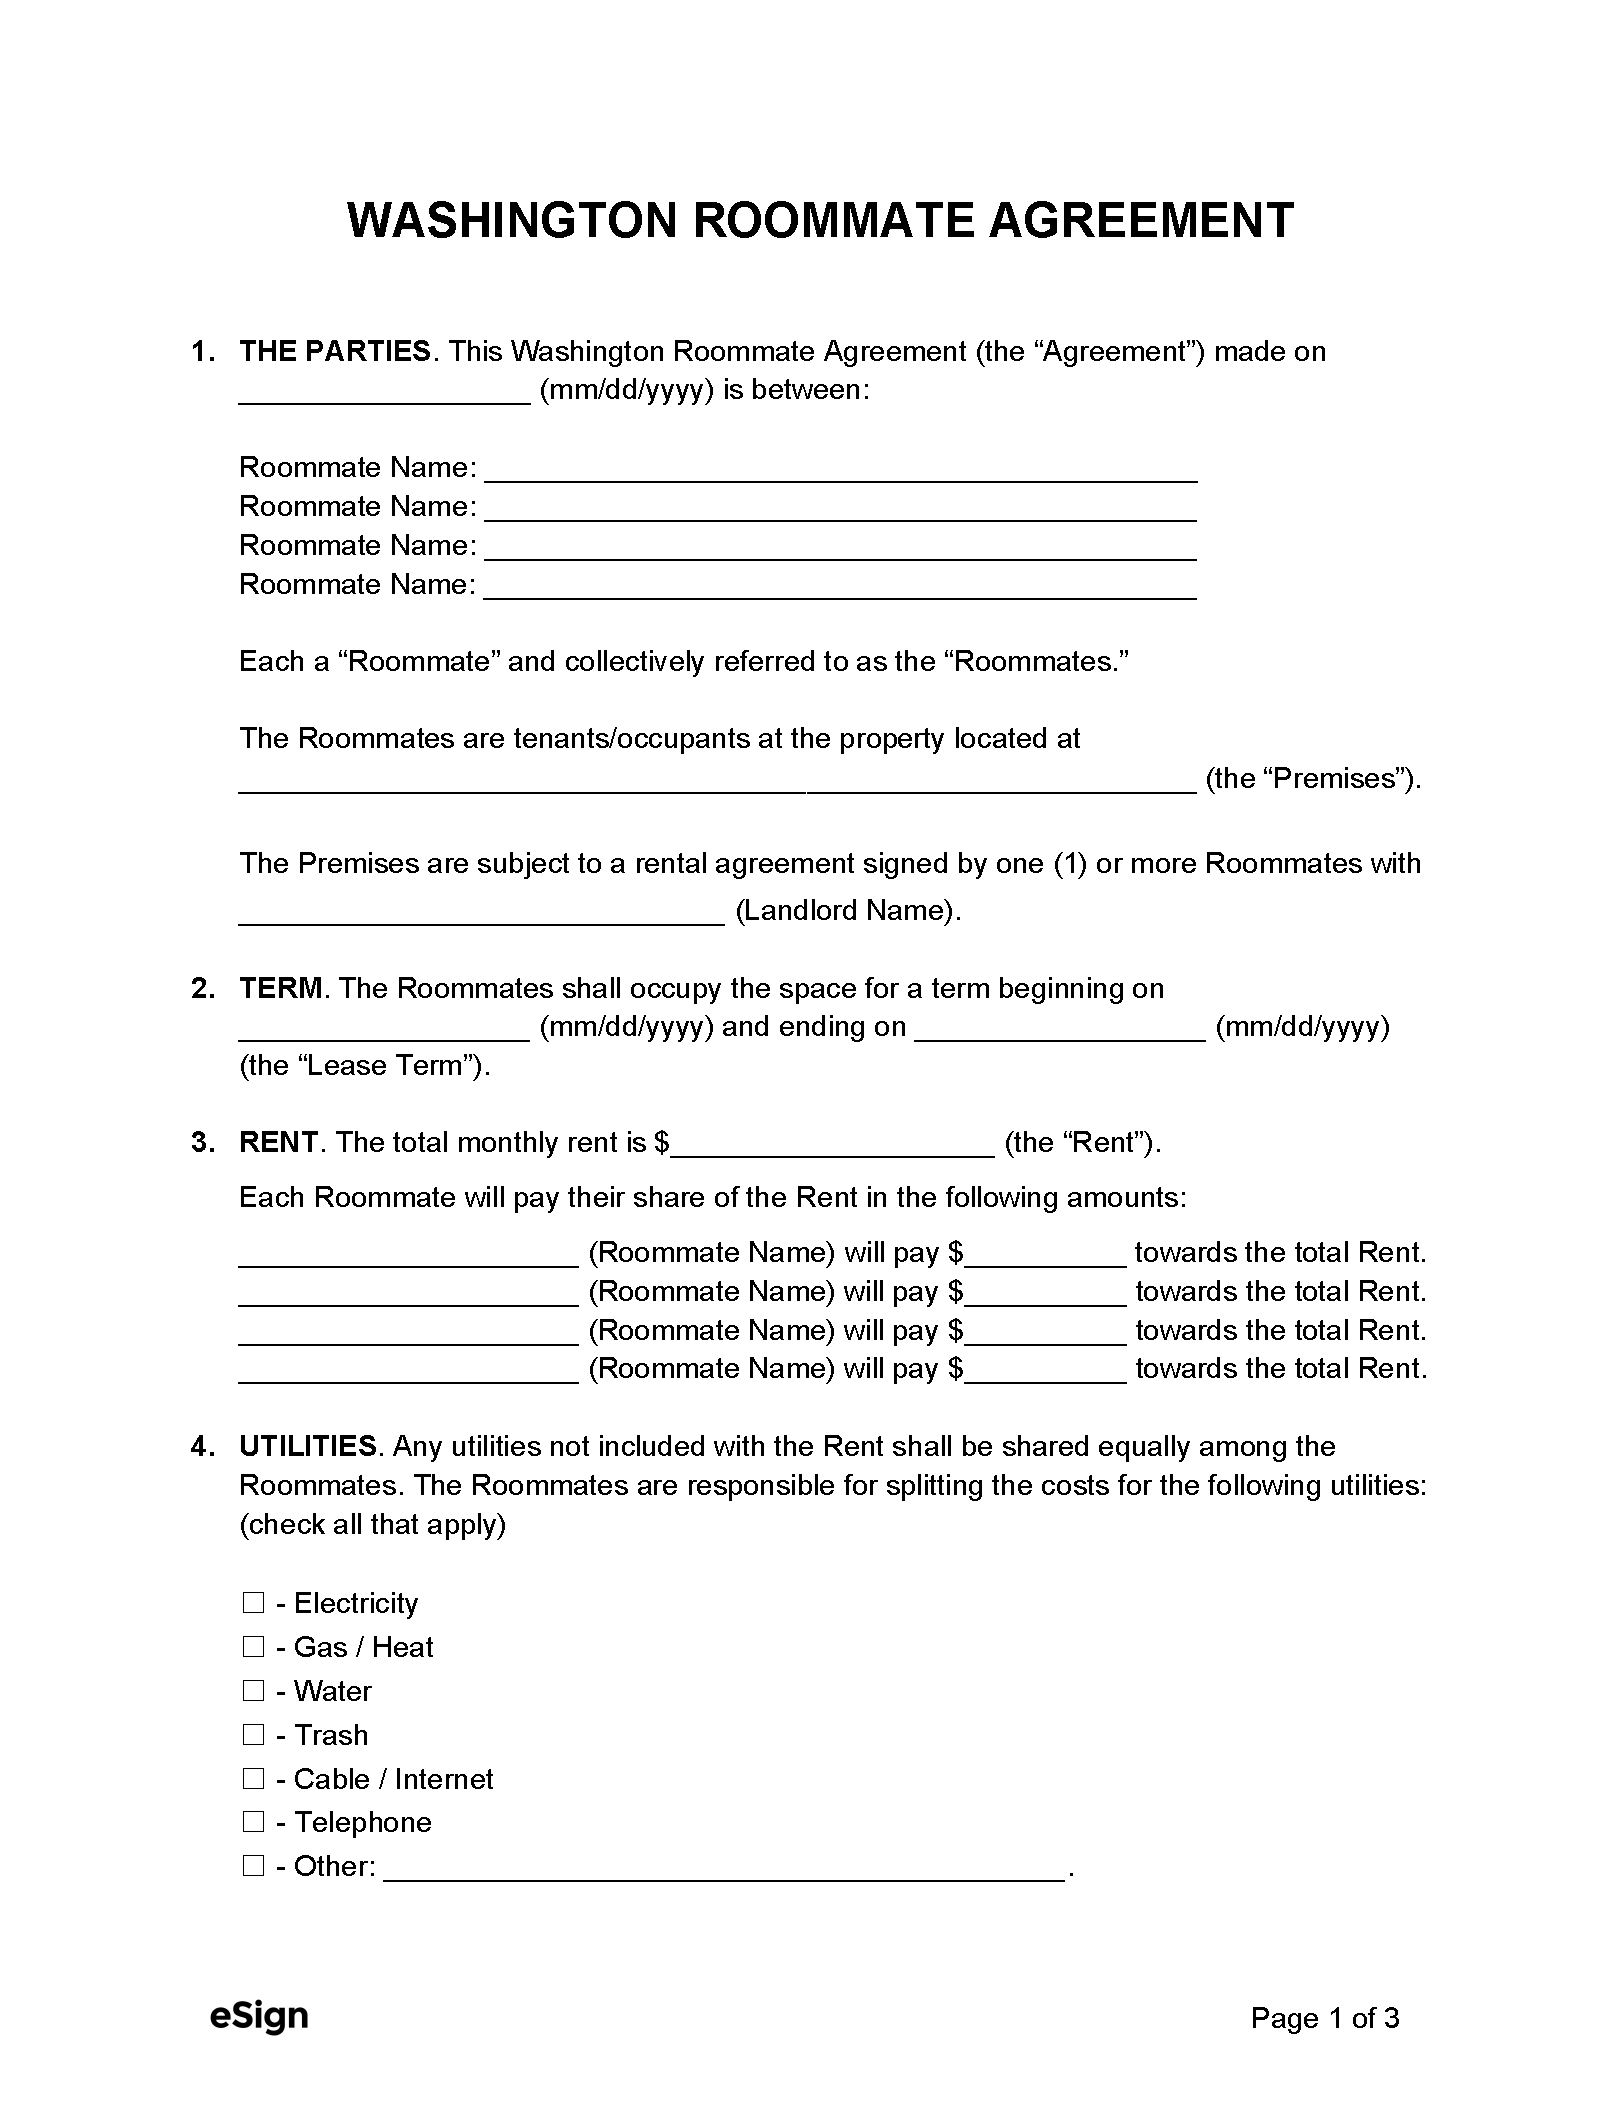 Free Washington Roommate Agreement Template - PDF  Word